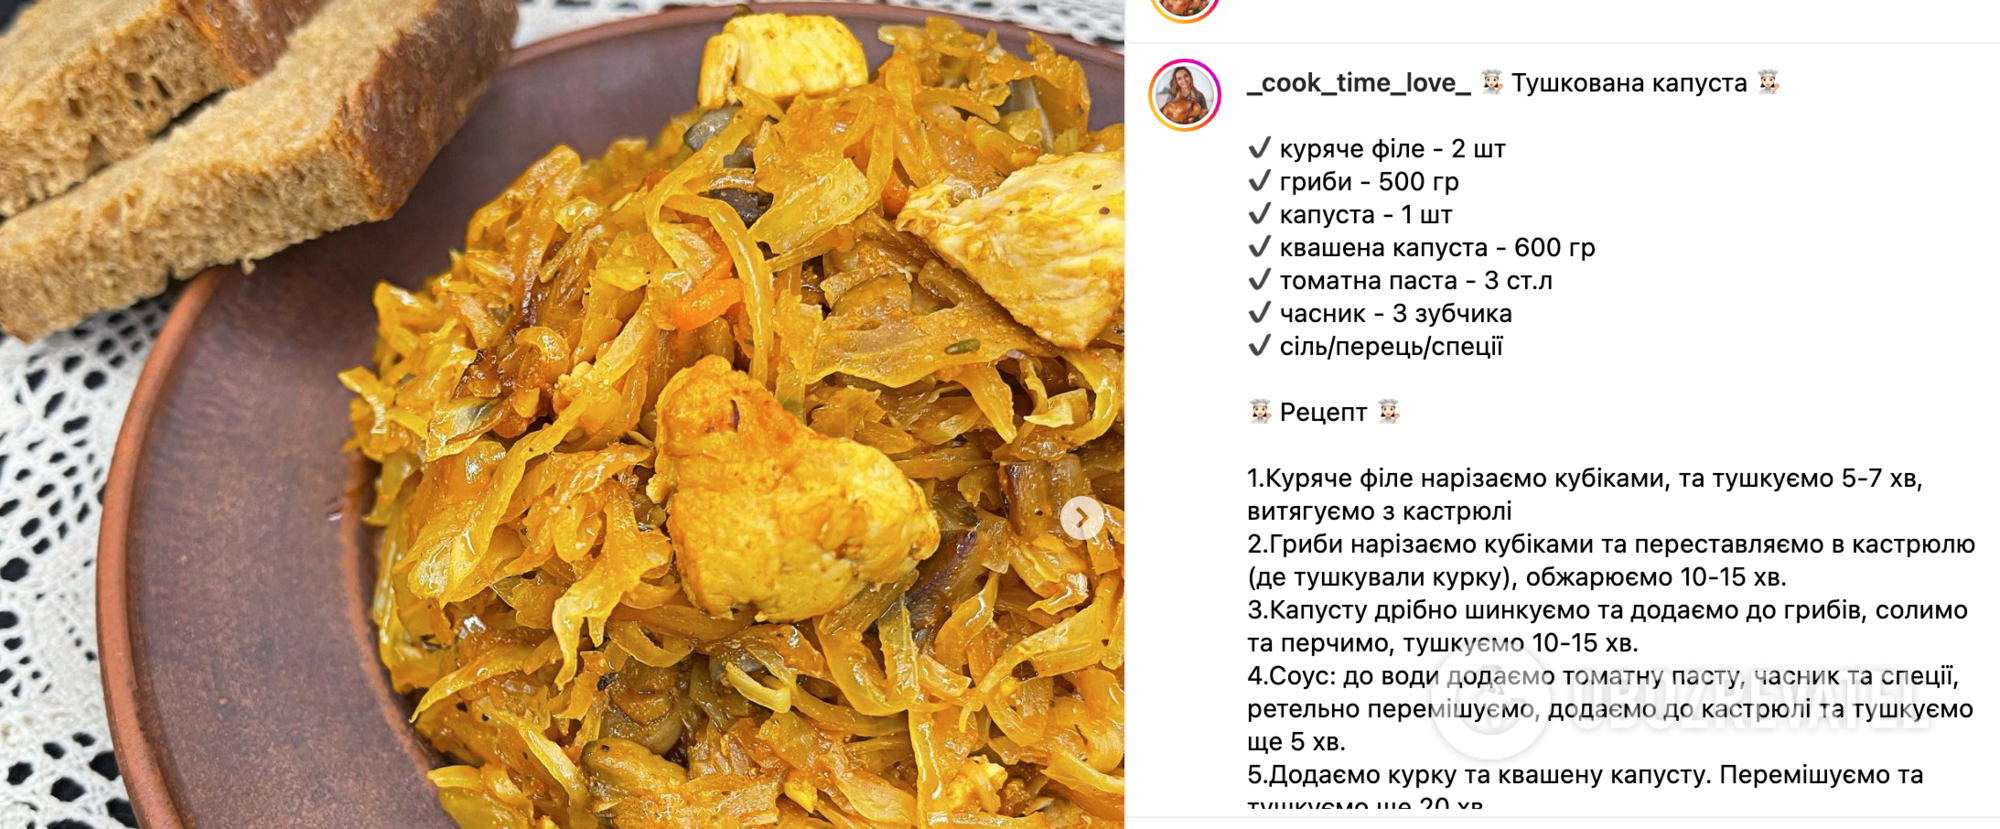 Cabbage recipe